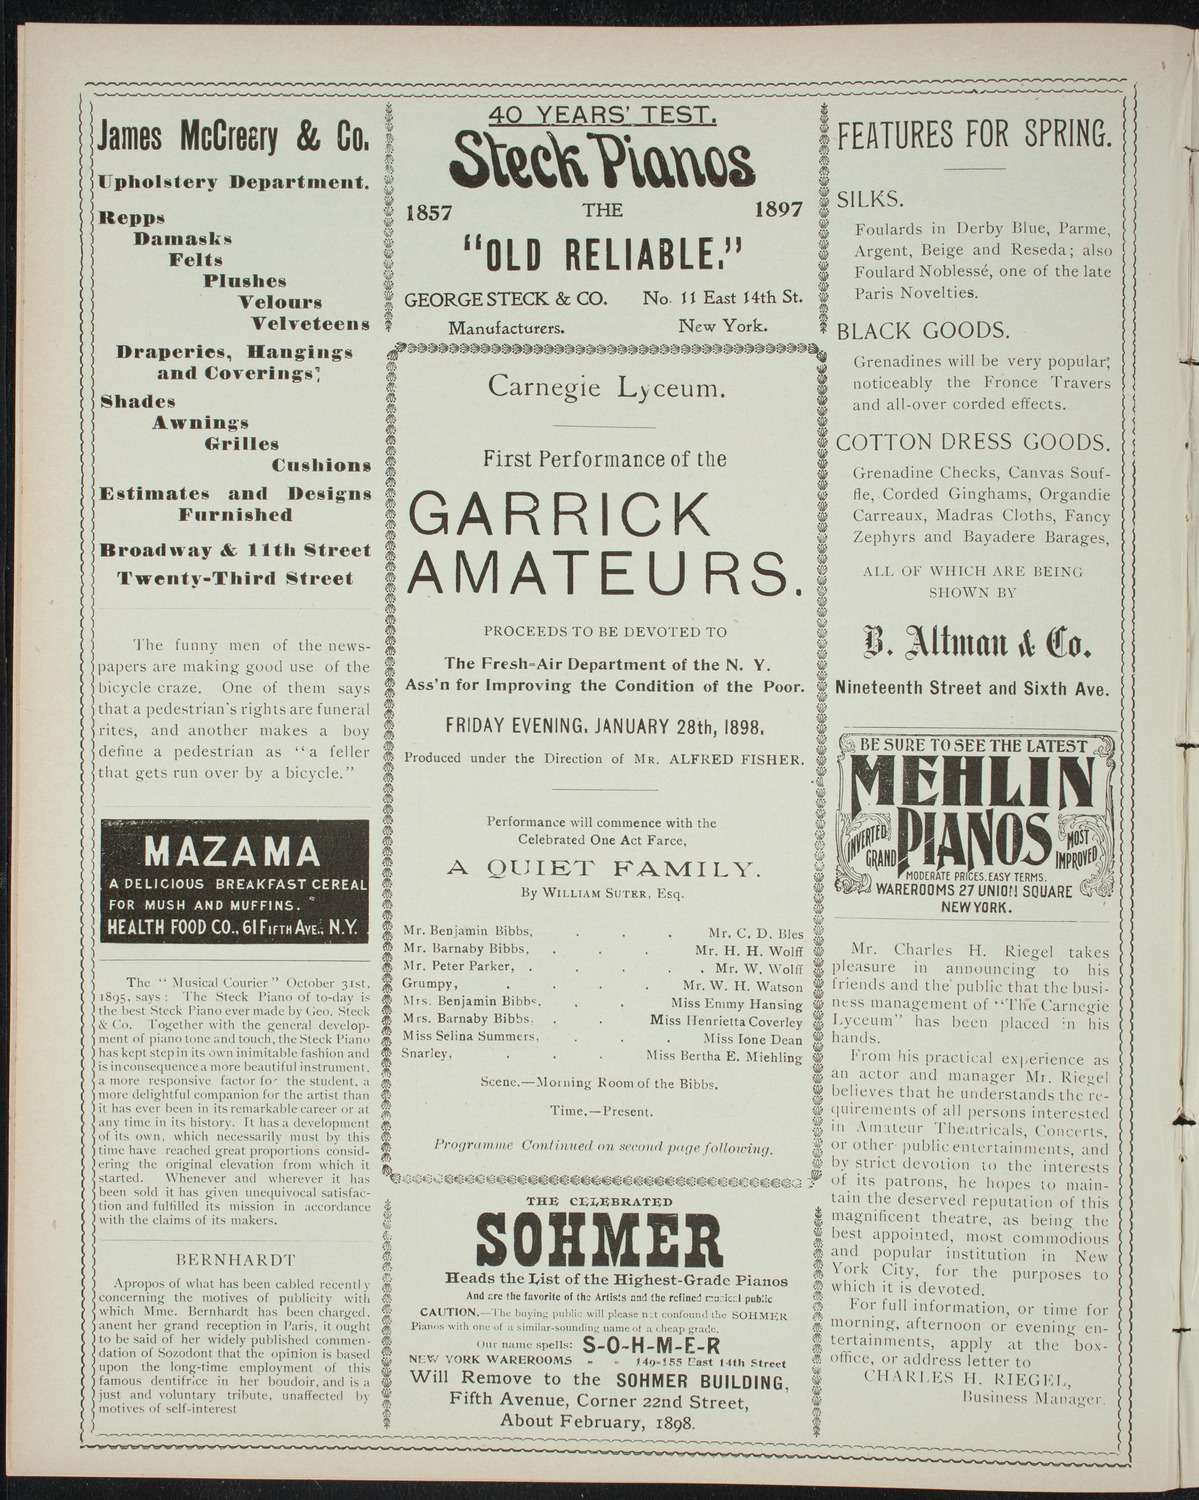 Garrick Amateurs, January 28, 1898, program page 4